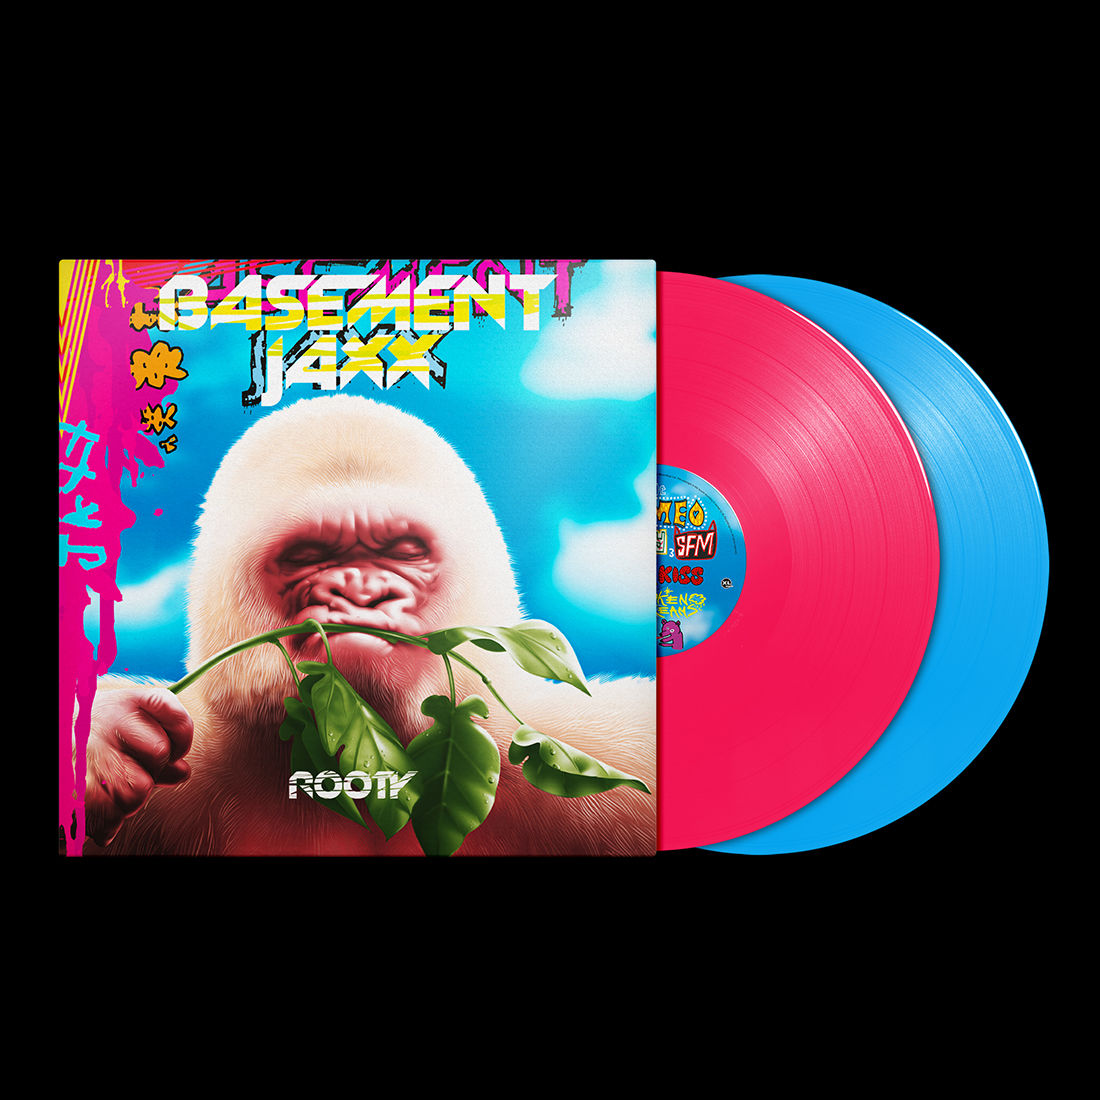 Basement Jaxx - Rooty: Pink + Blue Vinyl 2LP